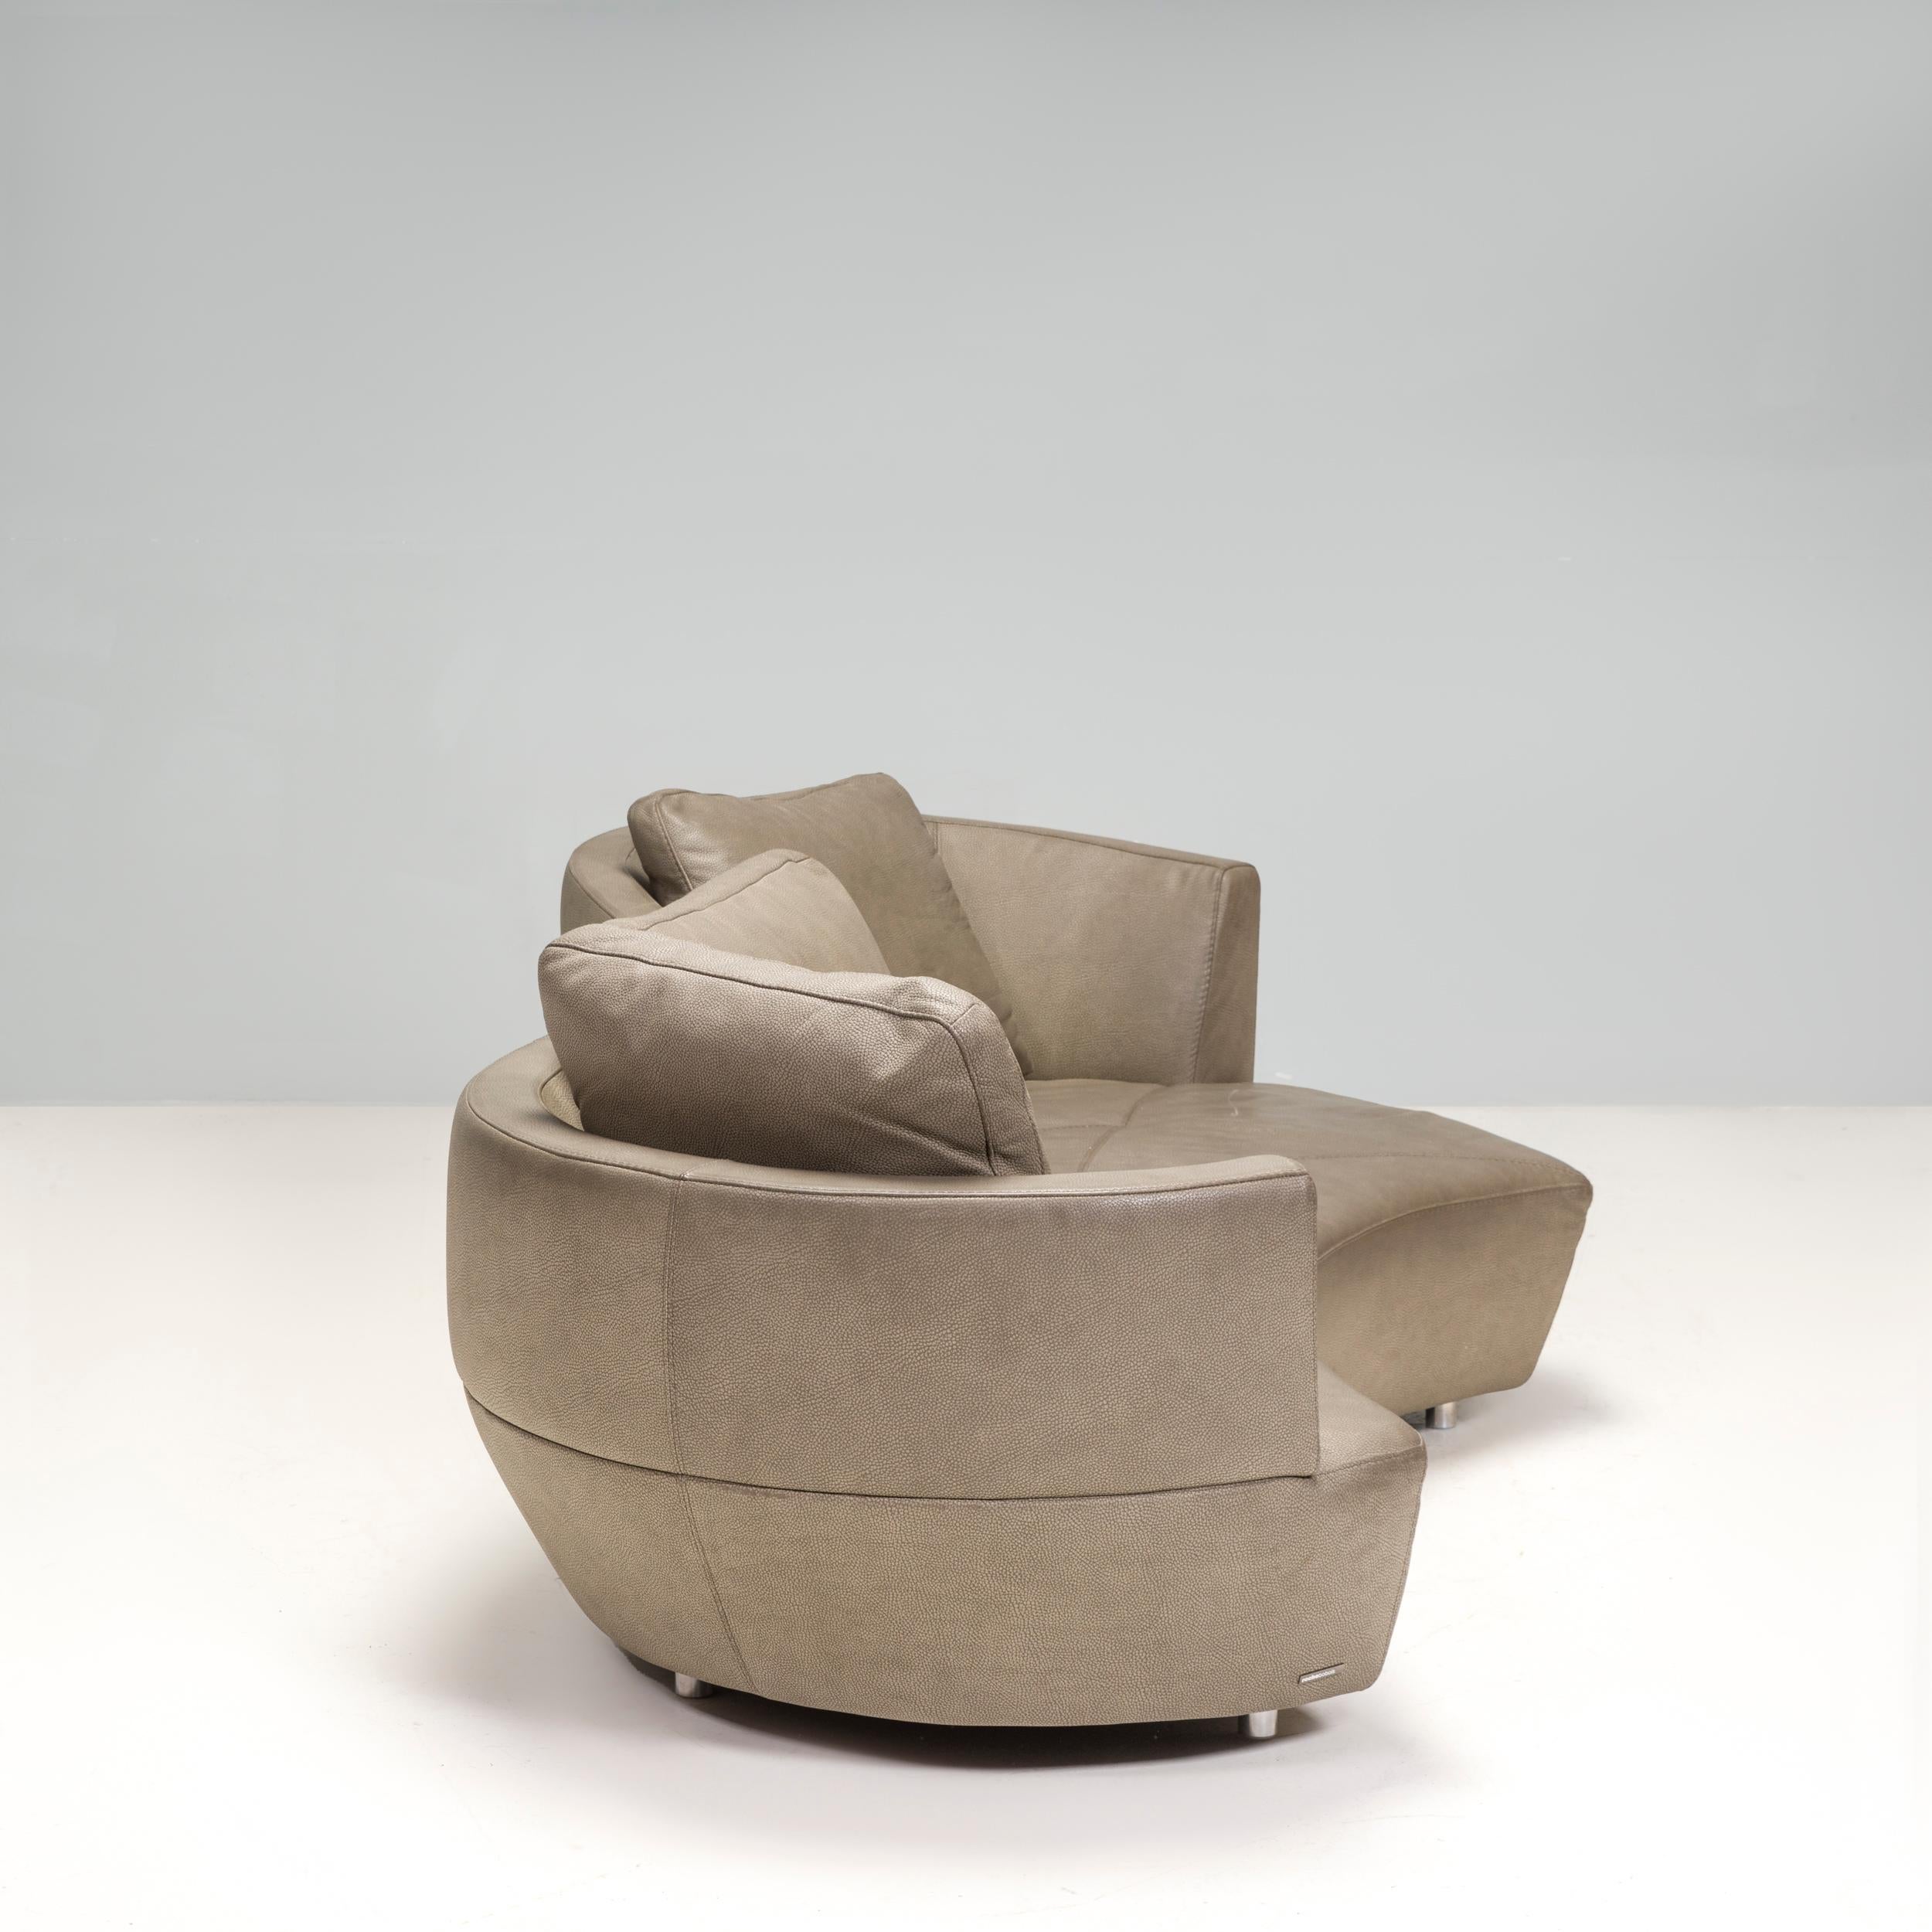 French Roche Bobois by Gabriele Assmann & Alfred Kleene Leather Digital Curved Sofa For Sale